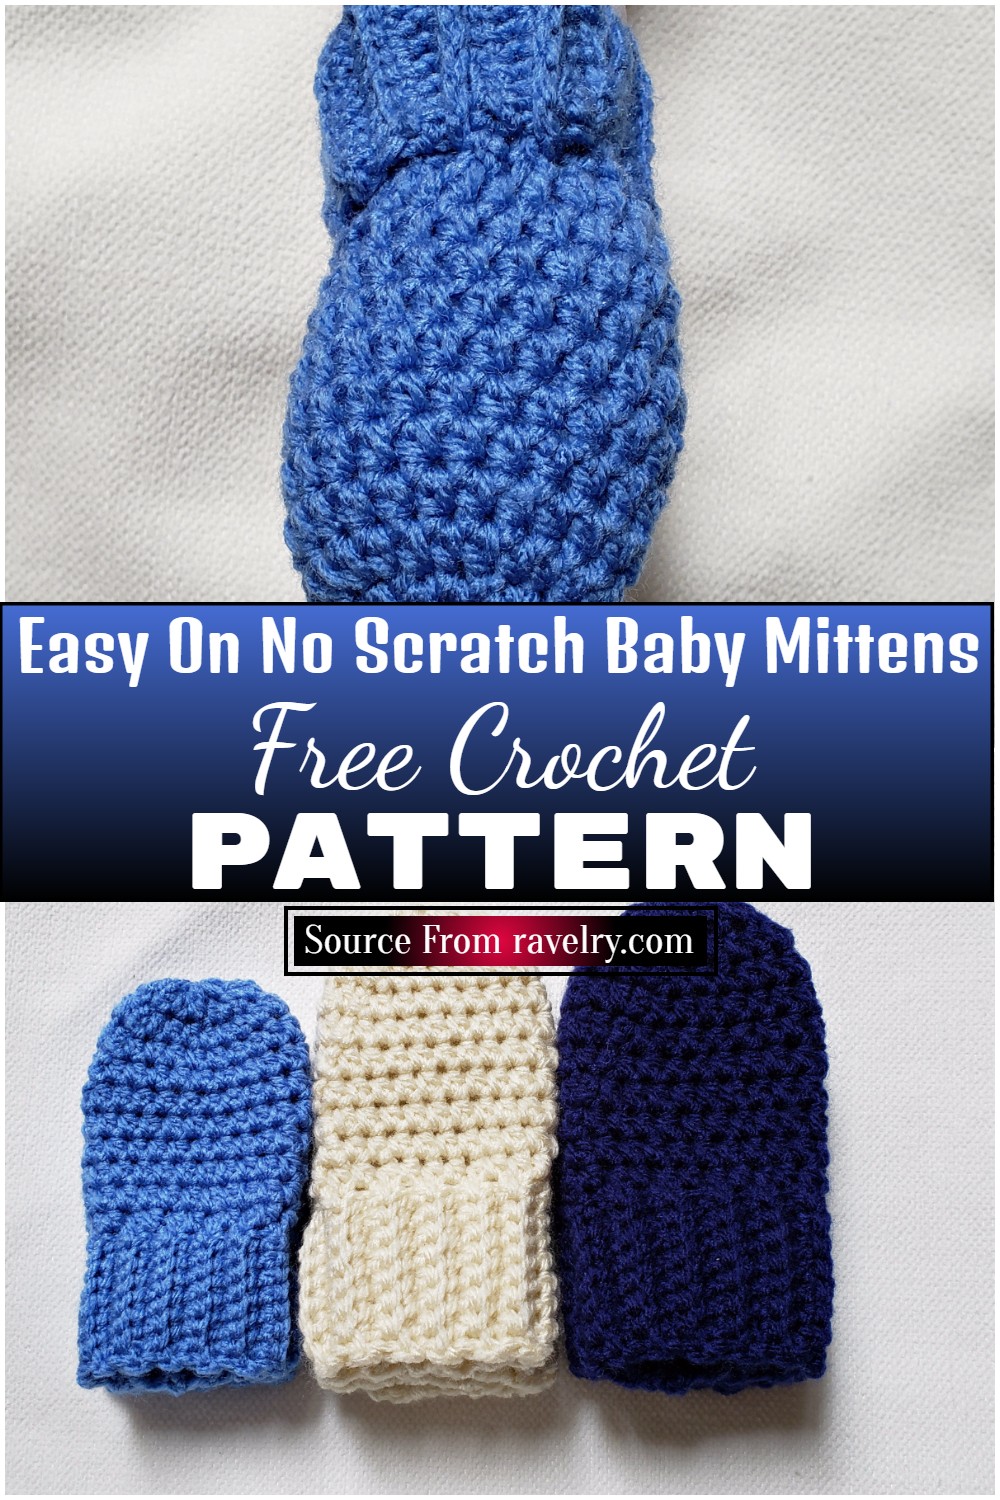 Free Crochet Easy On No Scratch Baby Mittens Pattern